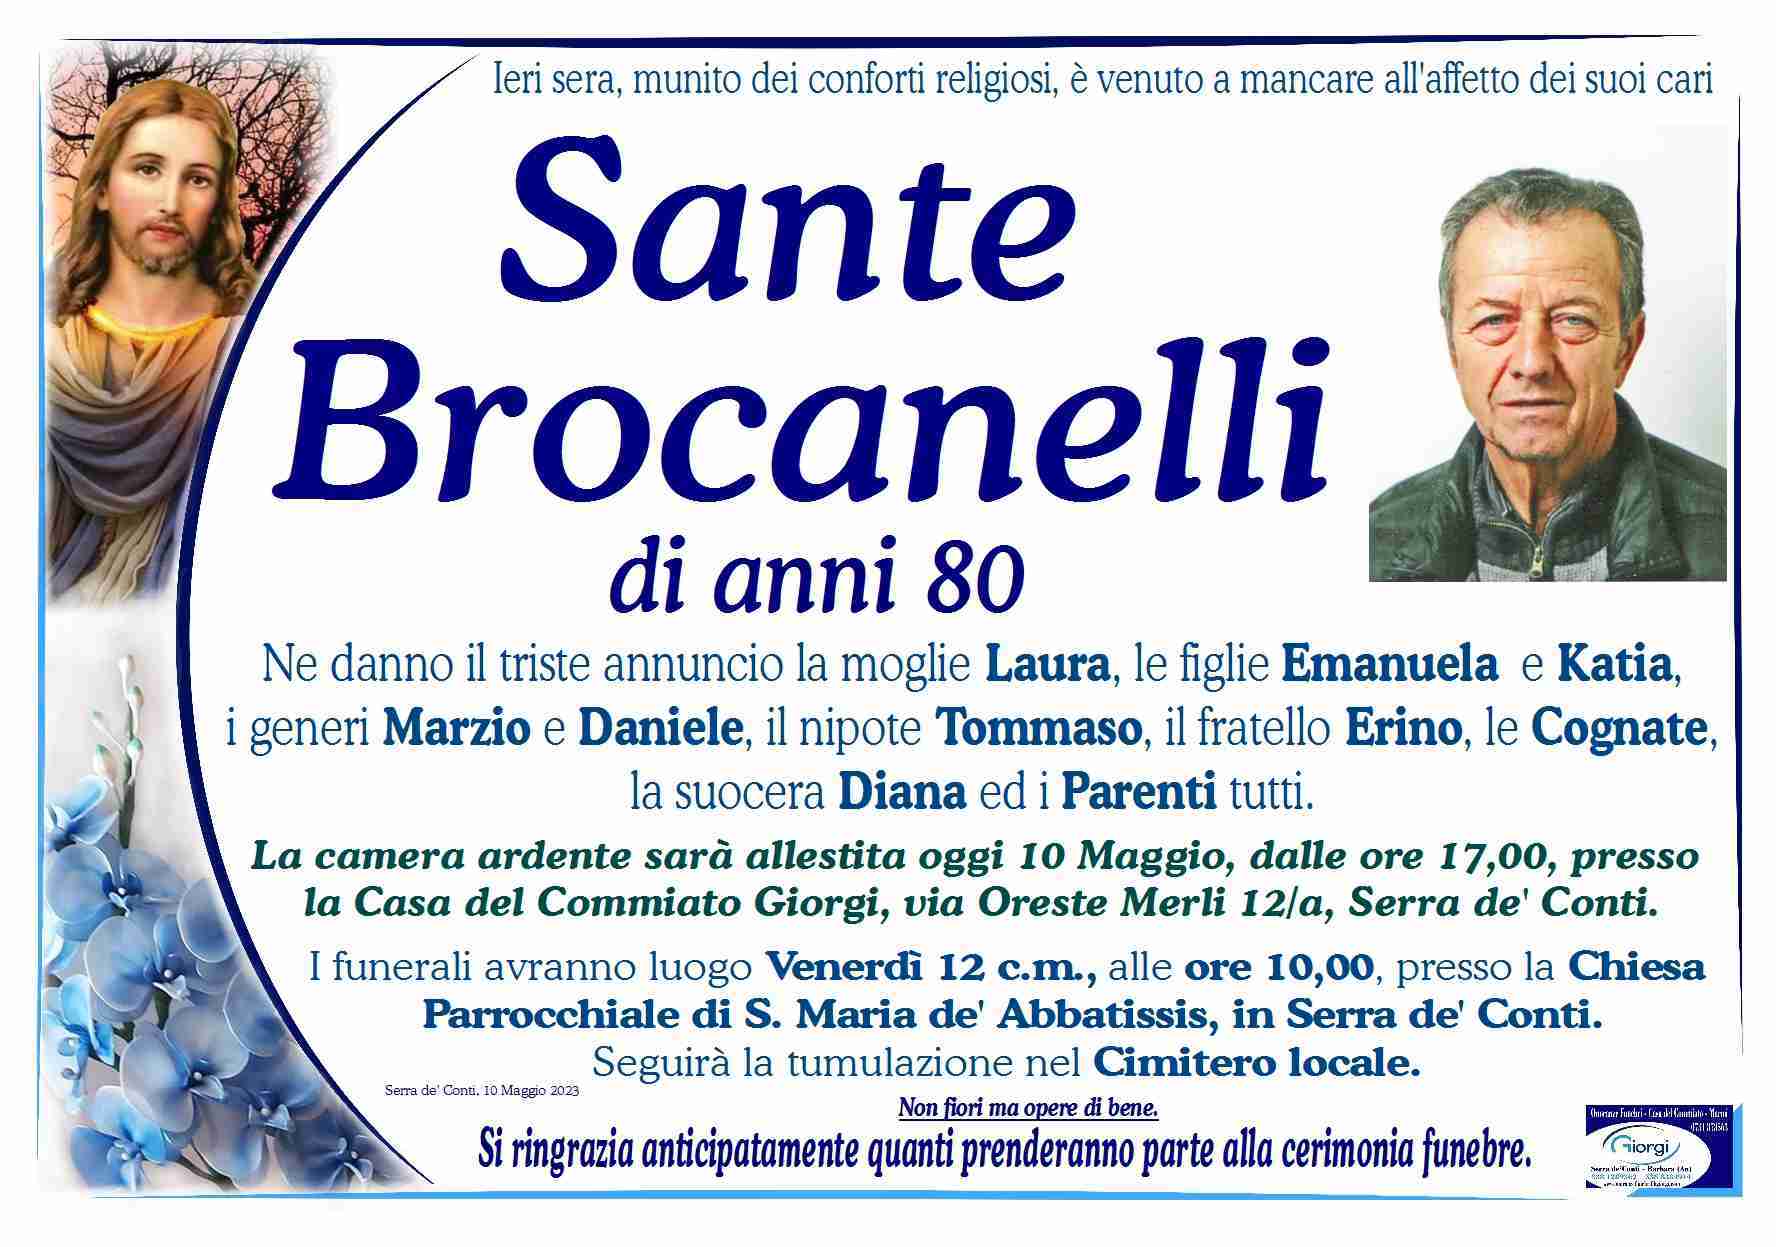 Sante Brocanelli